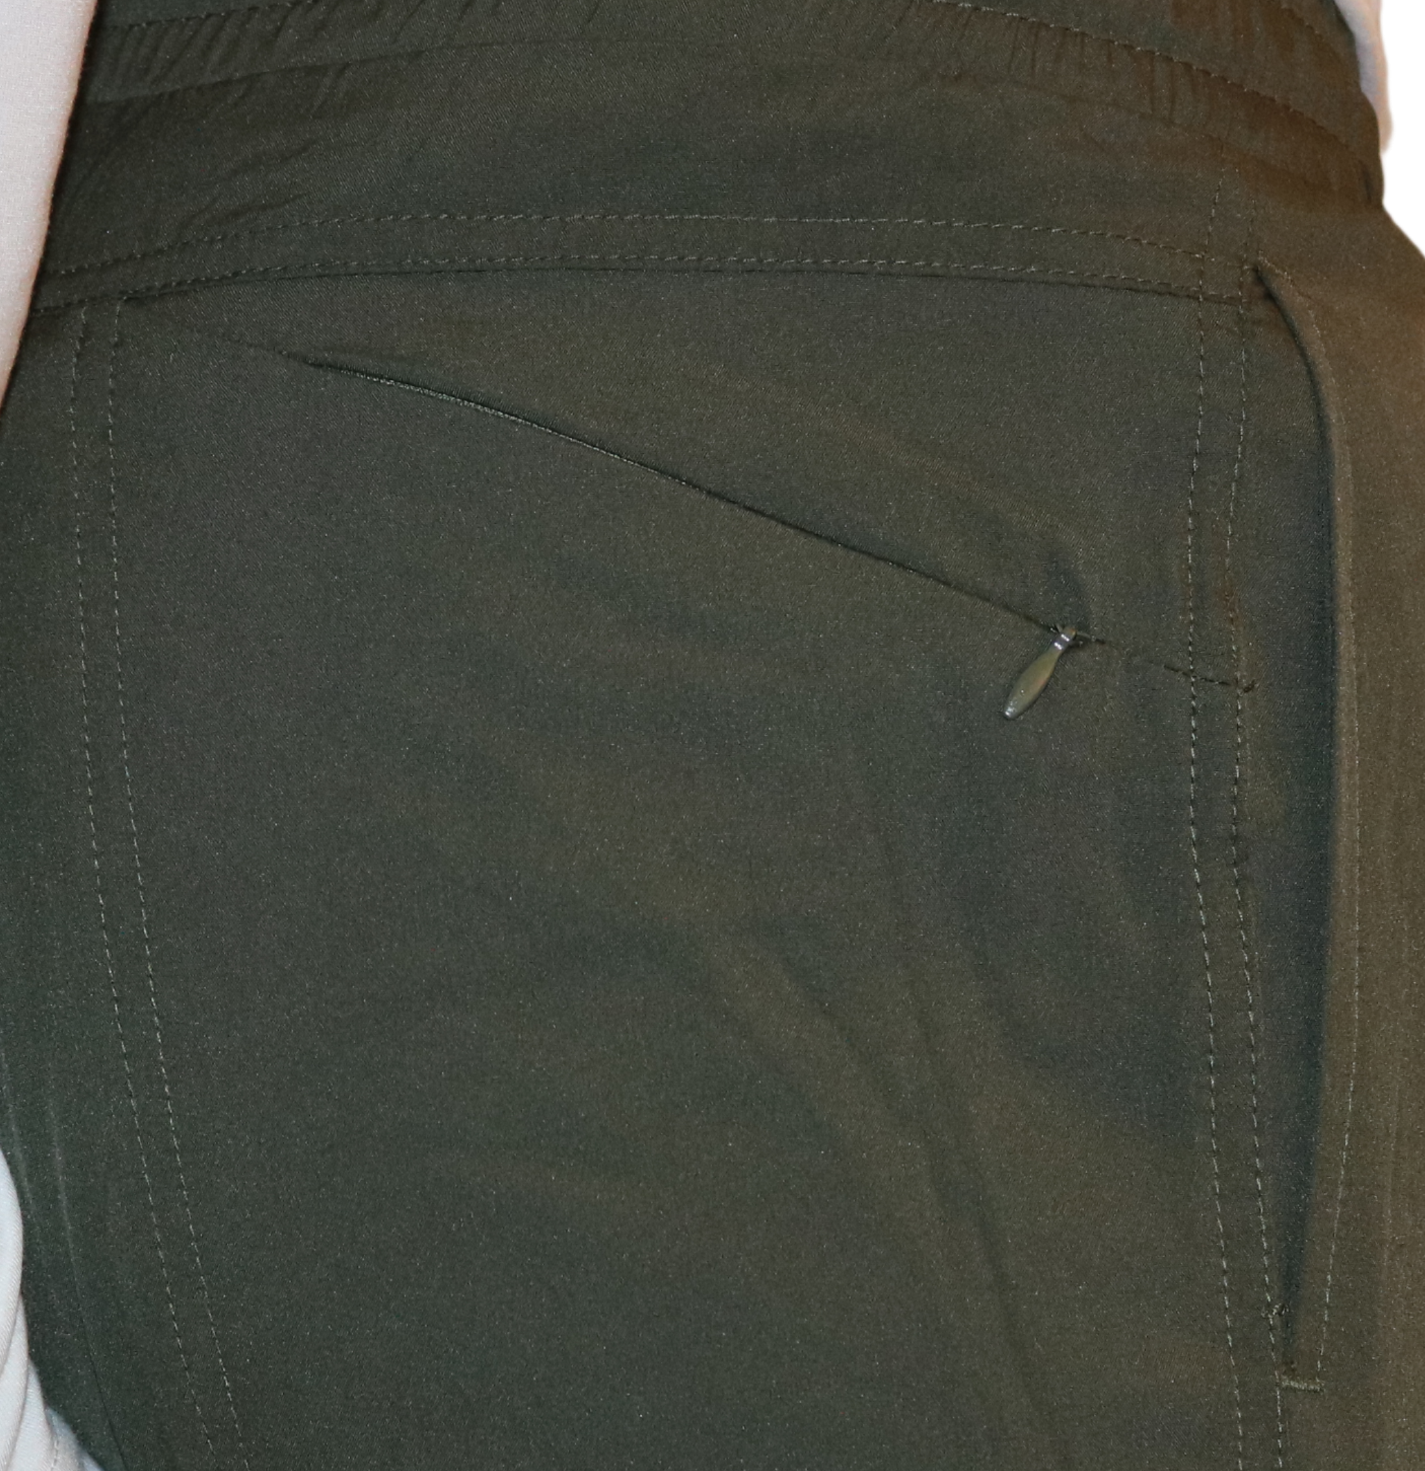 Back pocket of the Bamboo Lined Sabalo Fishing Shorts. 